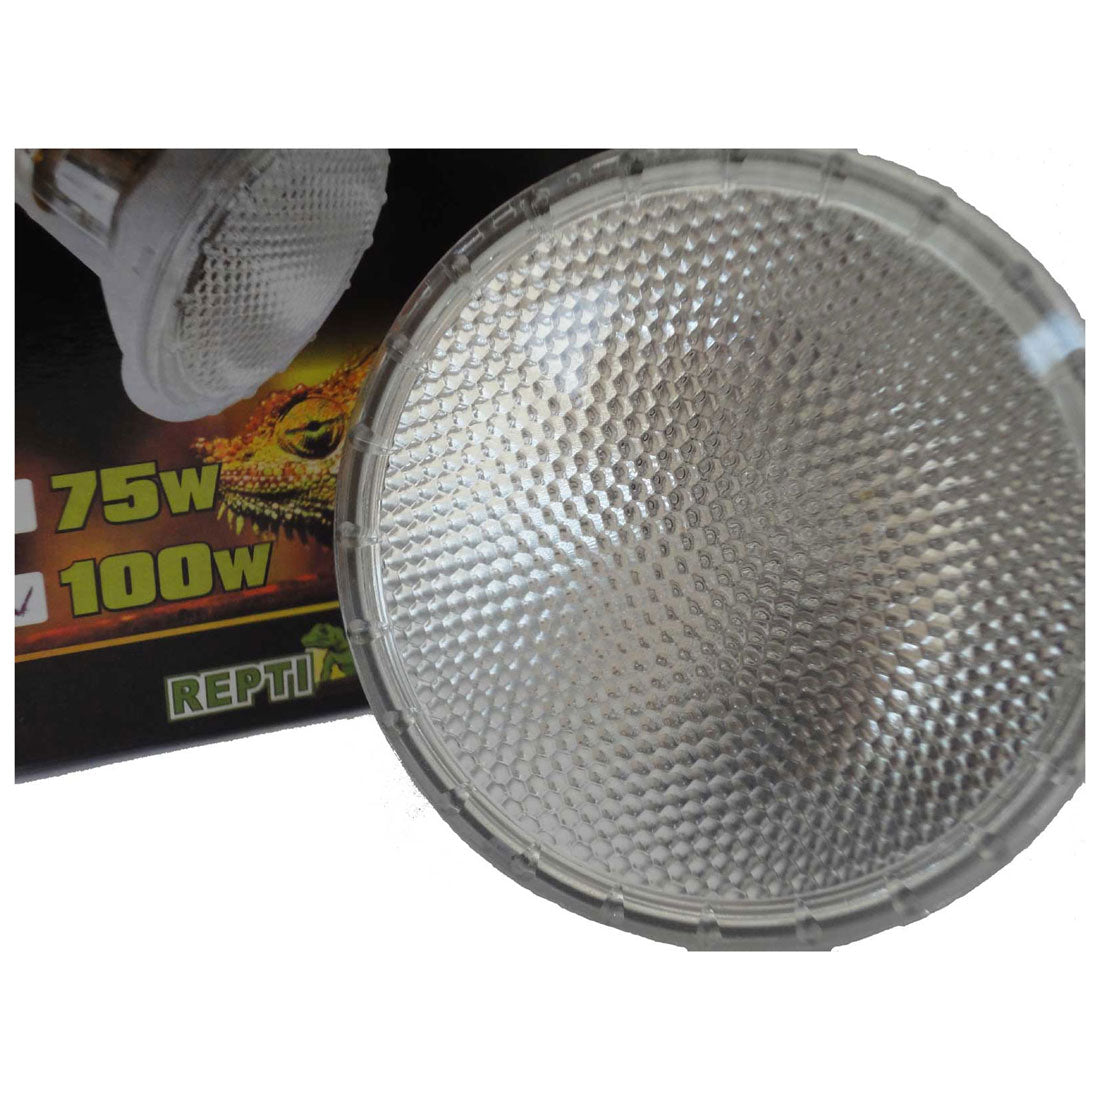 Halogen Spot Lamp 100W E27 Screw Type Pack of 3